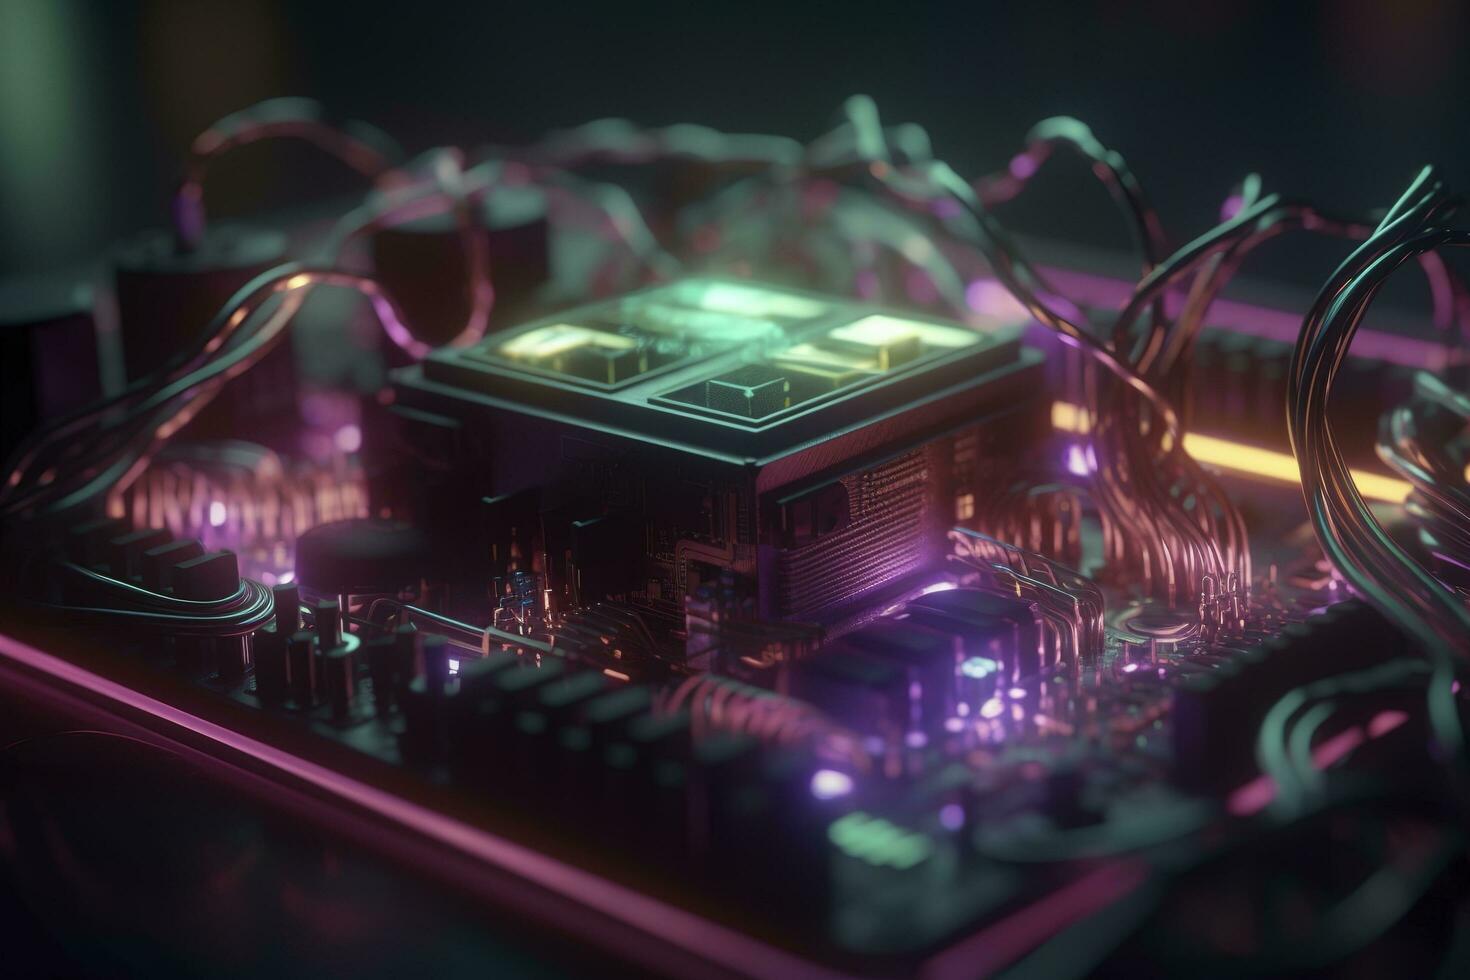 computer microchip halfgeleider Aan moederbord futuristische cyber neon verlichting, genereren ai foto